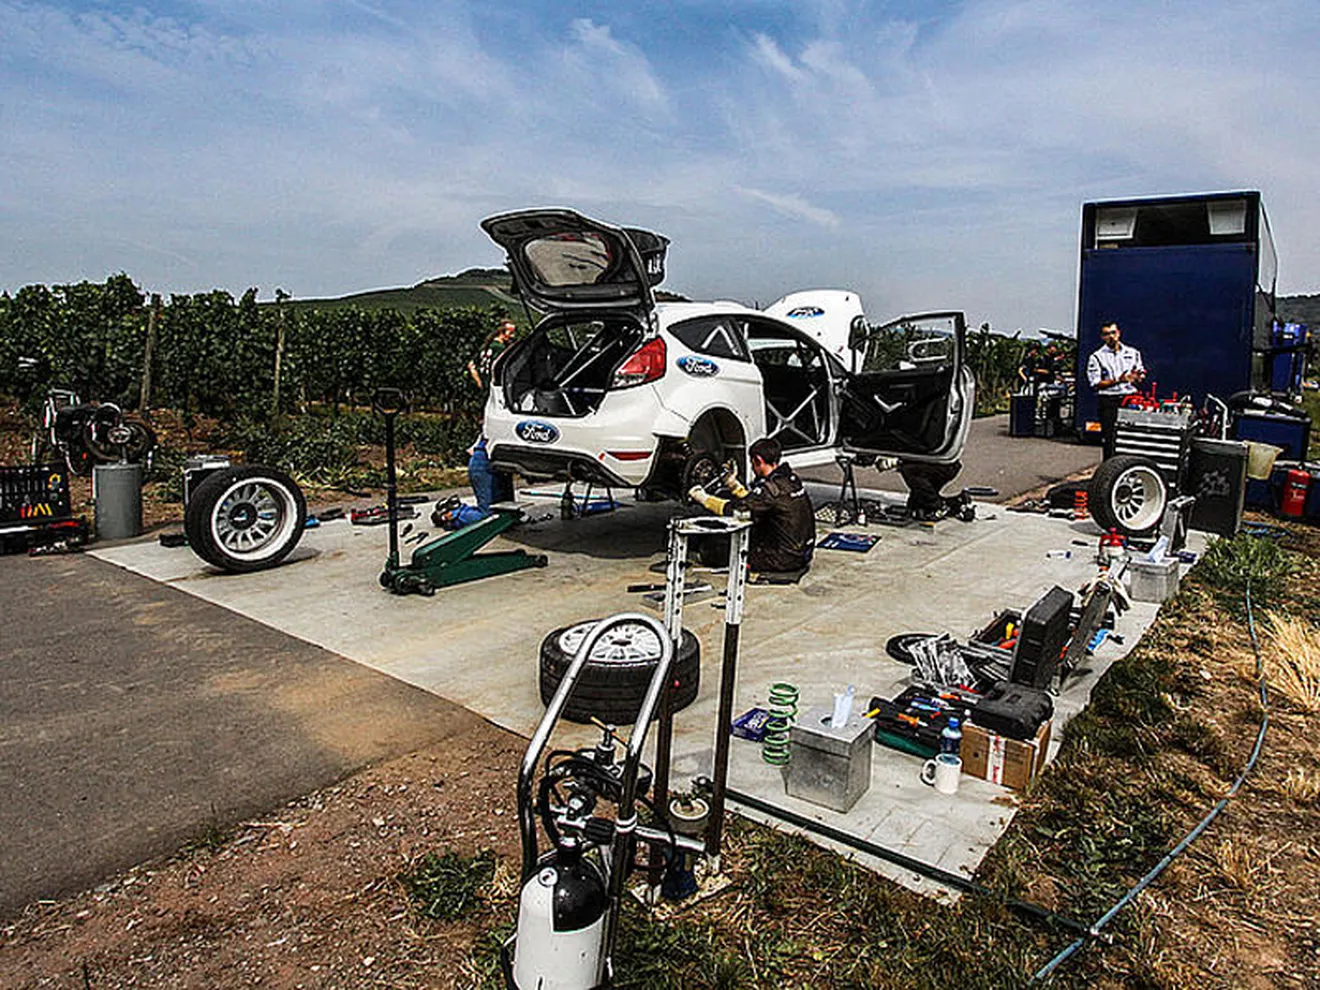 M-Sport ya prueba piezas del Fiesta RS WRC 2017